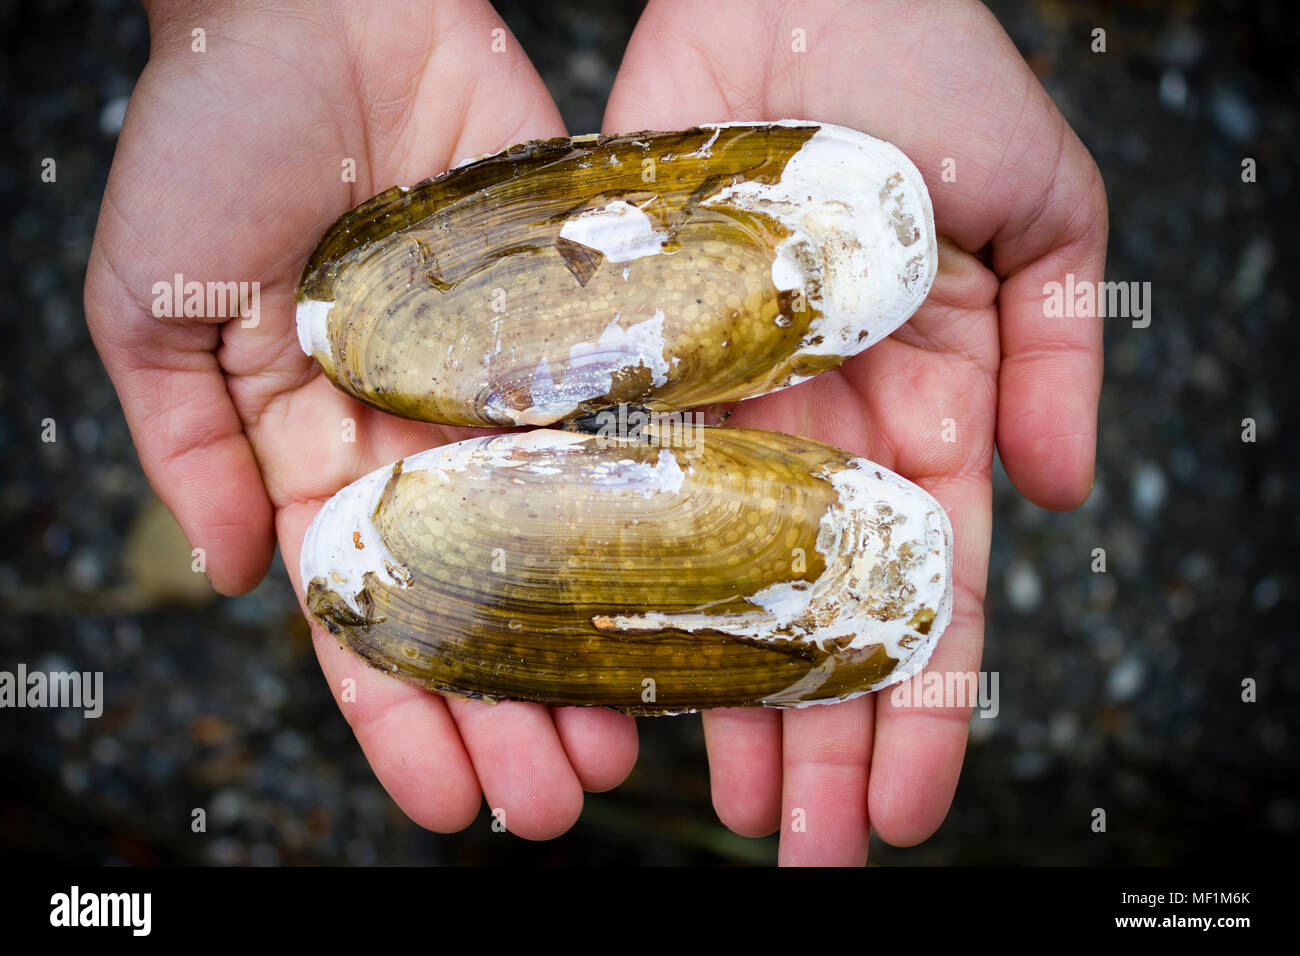 Hands holding a Pacific Razor Clam shell near Tofino in Pacific Rim National Park on Vancouver Island, British Columbia, Canada. Stock Photo